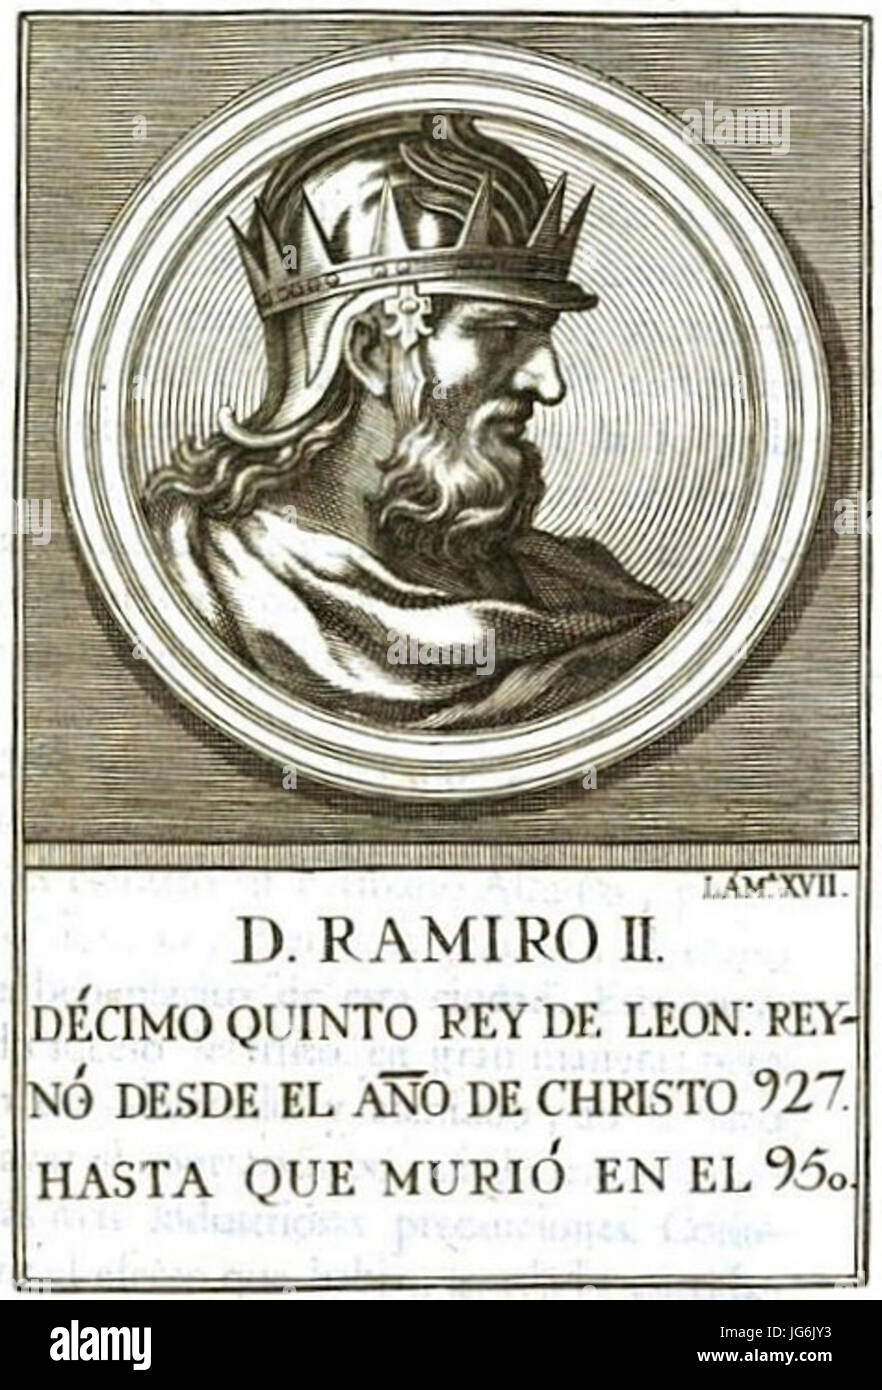 Retrato-095-Rey de León-Ramiro II Banque D'Images